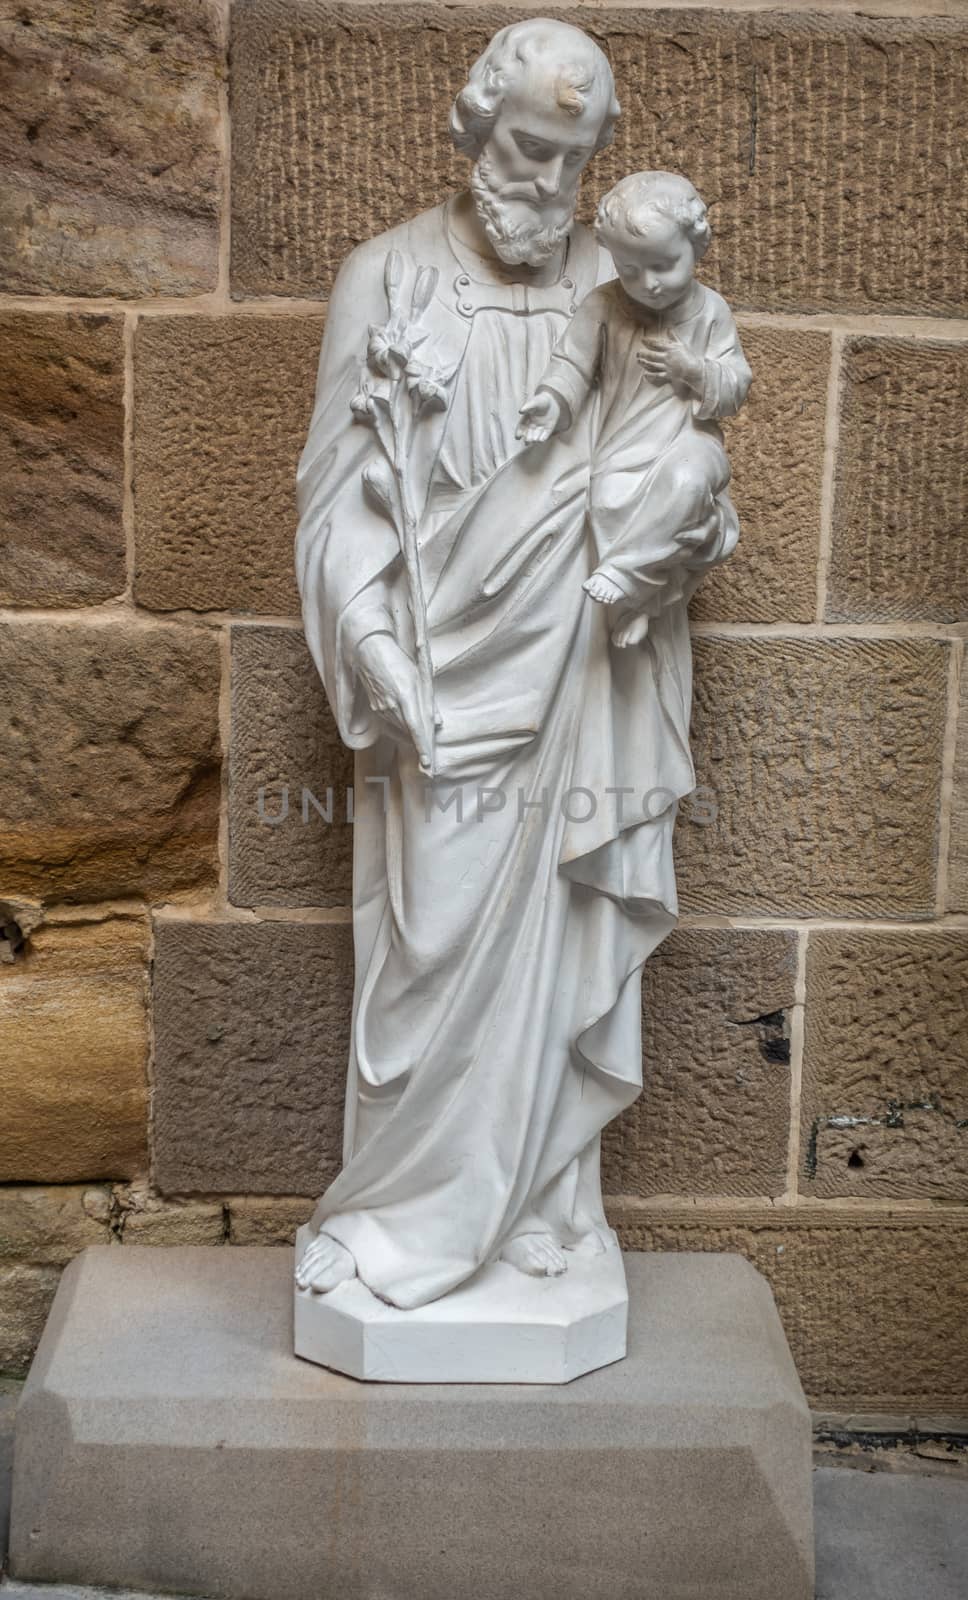 Sydney, Australia - February 12, 2019: Inside Saint Patricks Church on Grosvenor Street opposite of Lang Park. Closeup of white Saint Joseph with child statue on low pedestal at courtyard.